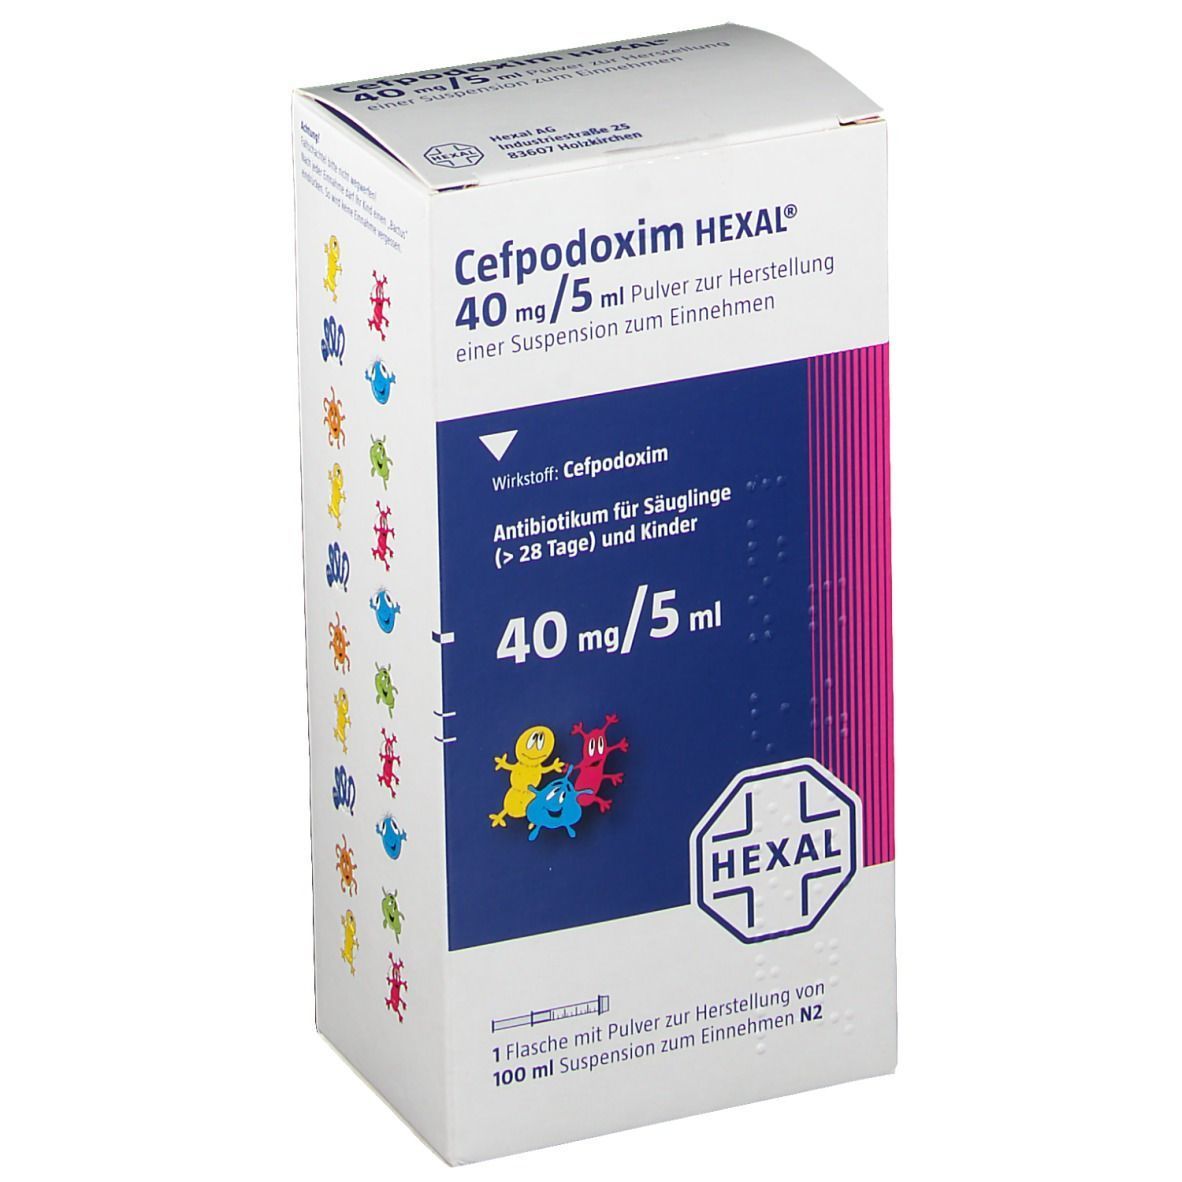 Cefpodoxim HEXAL® 40 mg/5 ml